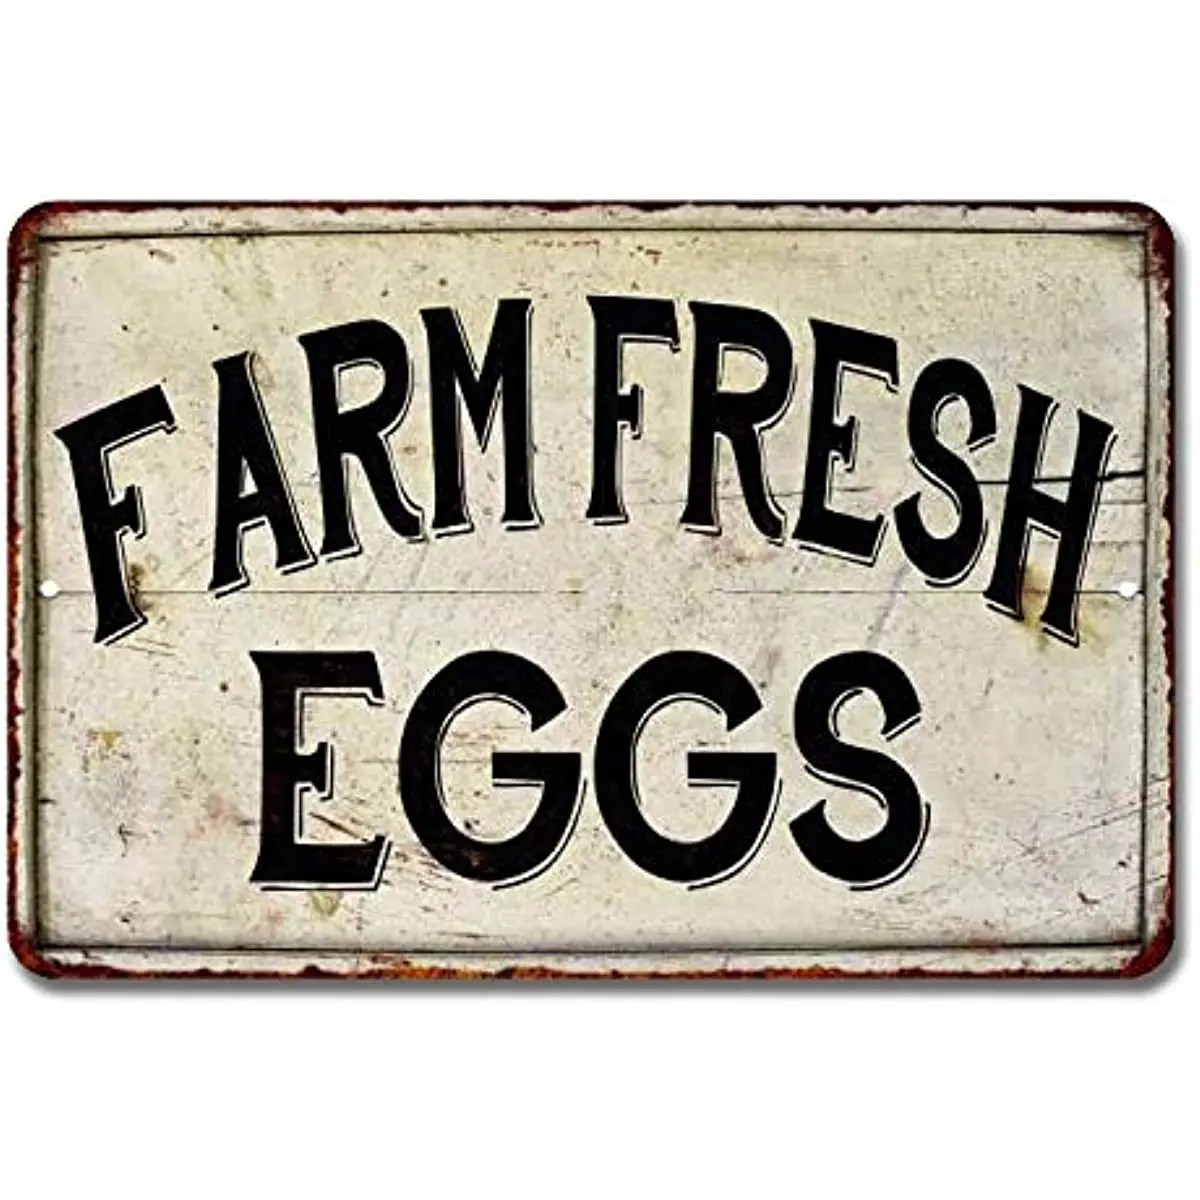 

New Farm Fresh Eggs Sign Vintage Sweet Decor Chicken Coop Decorations Barnyard Sale House Rustic Tin Wall Art High Gloss Metal